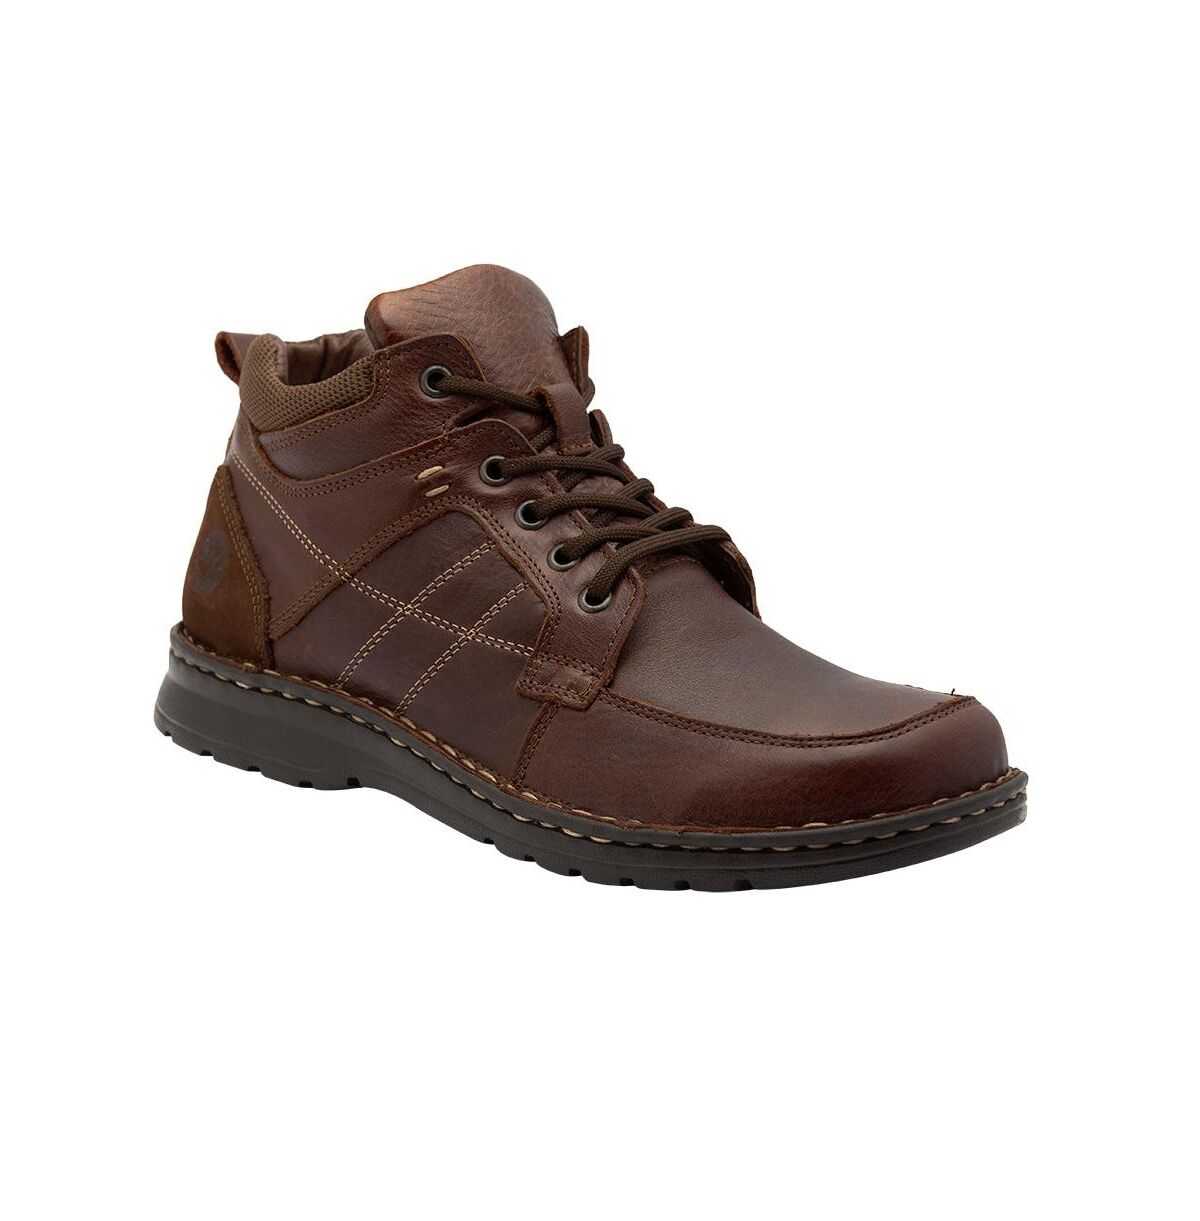 Lobo Solo Men's Brown Premium Leather Boots, Handmade Unique Shoes With Laces Closure, Duval 9547 - Brown